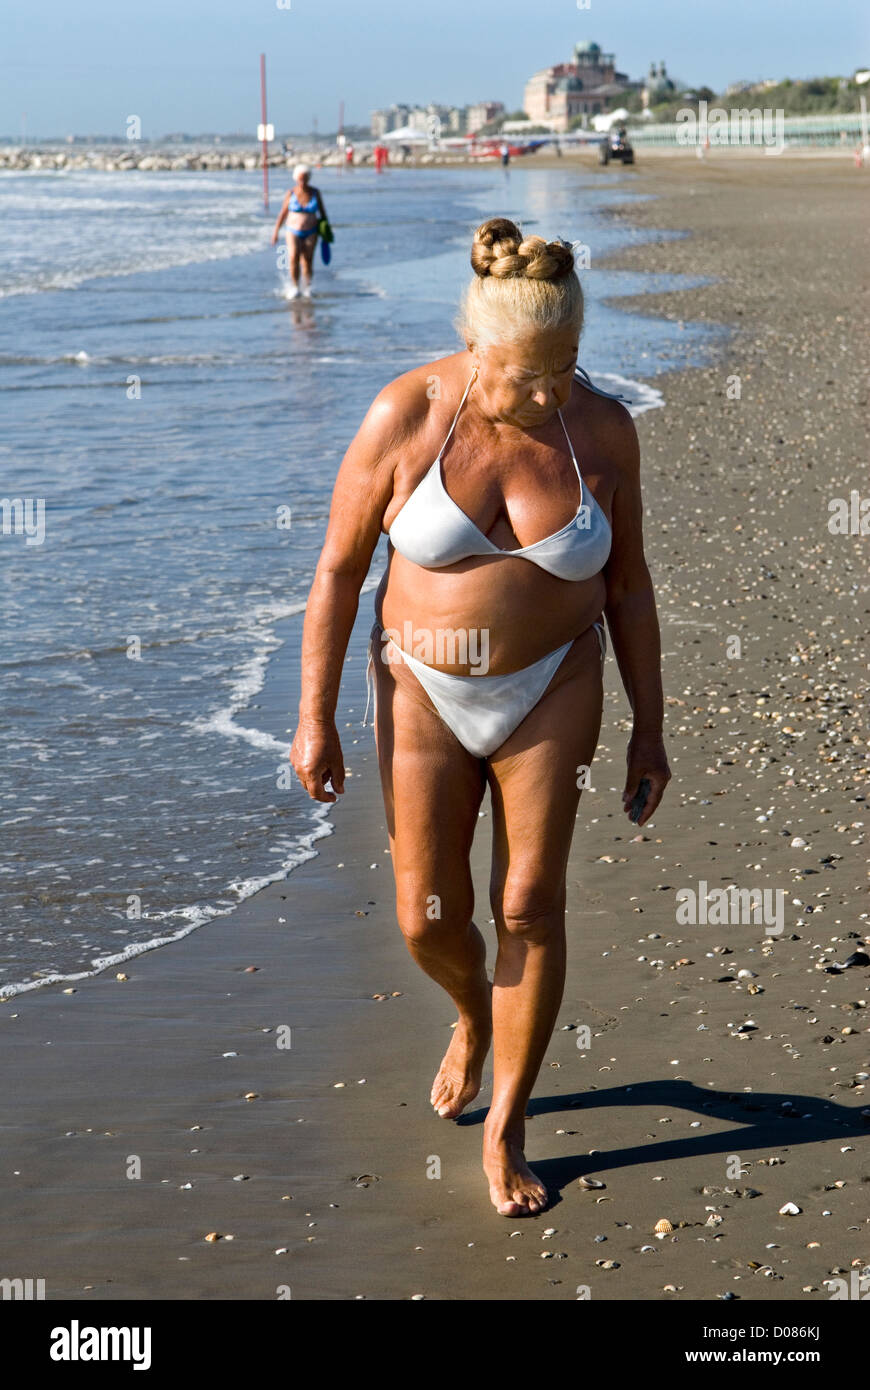 Older Woman In Bikini Banque d'image et photos - Alamy